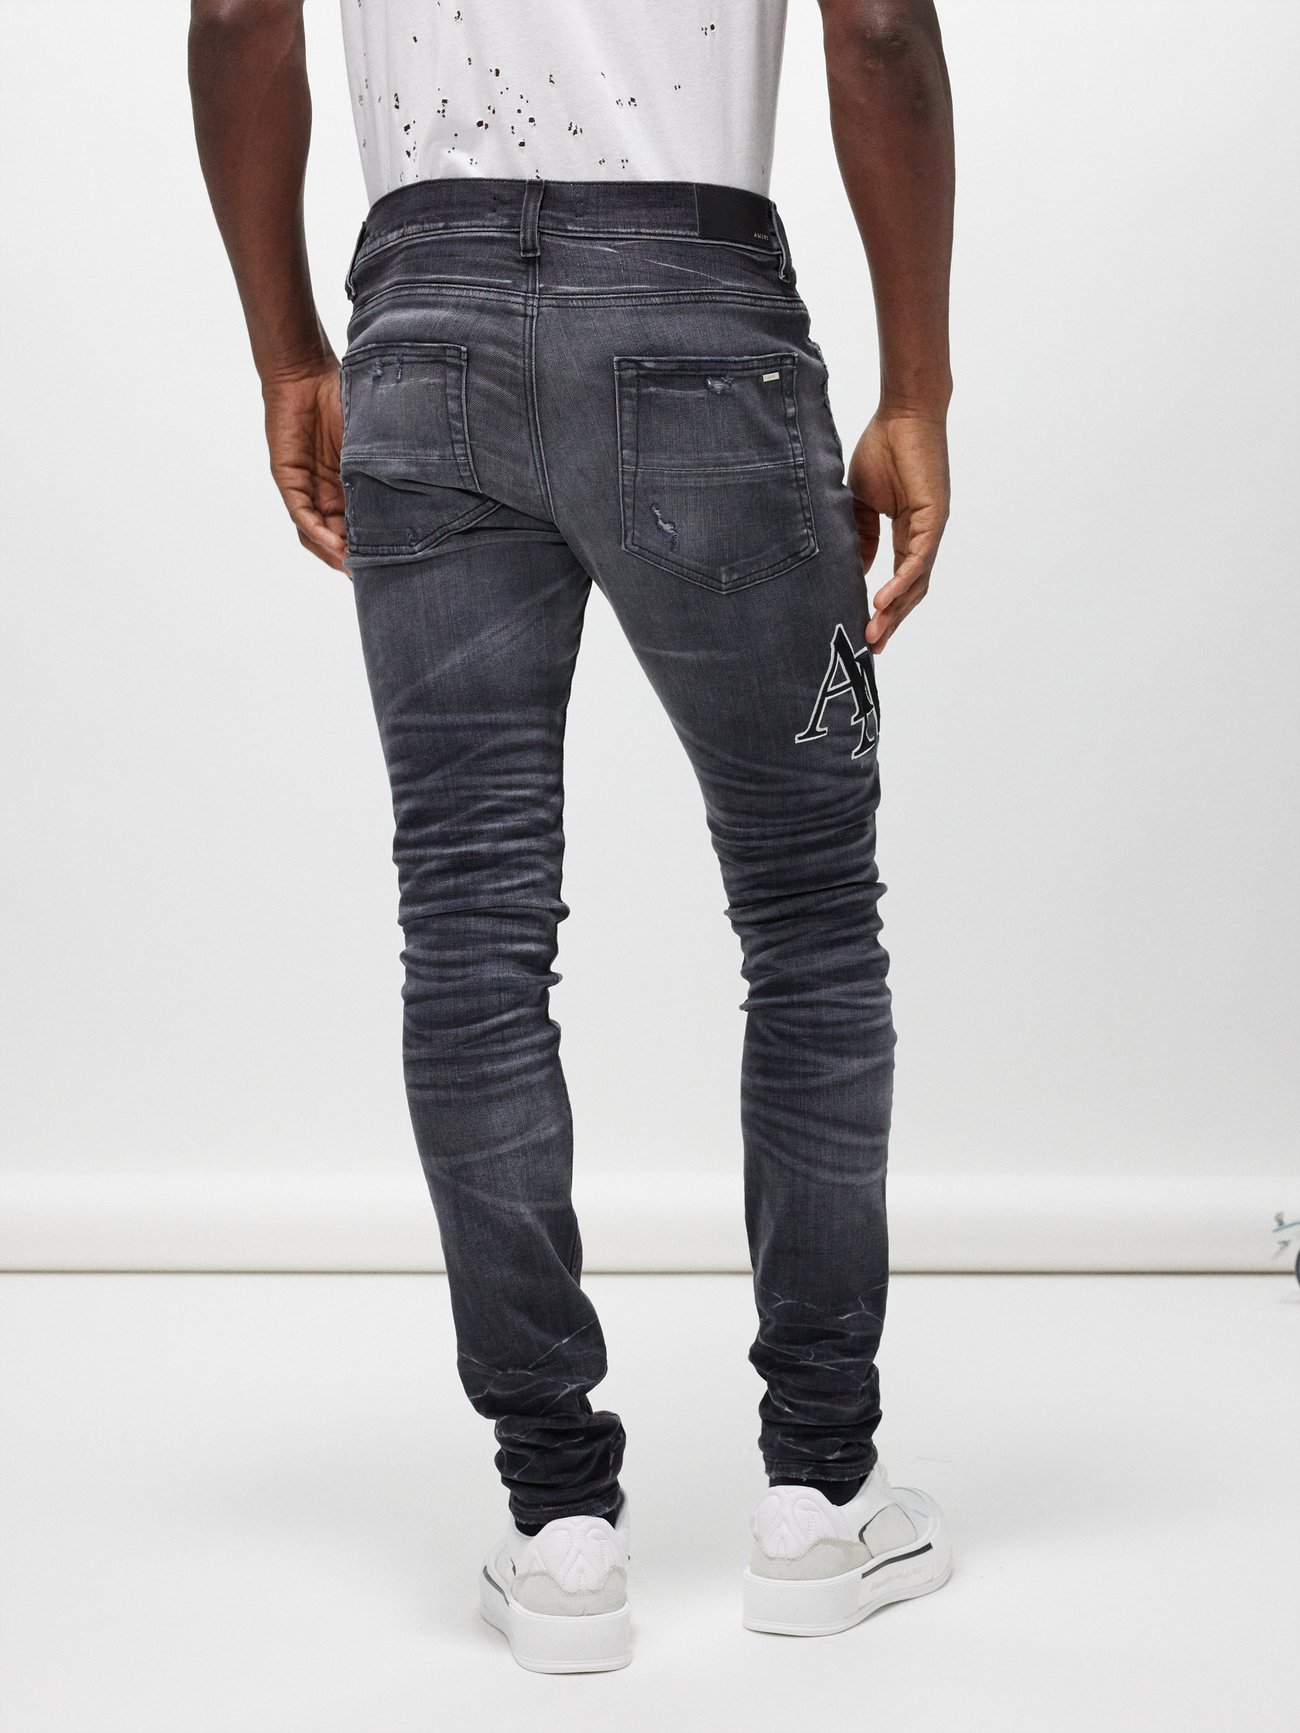 AMIRI, Staggered Logo Distressed Jeans, Men